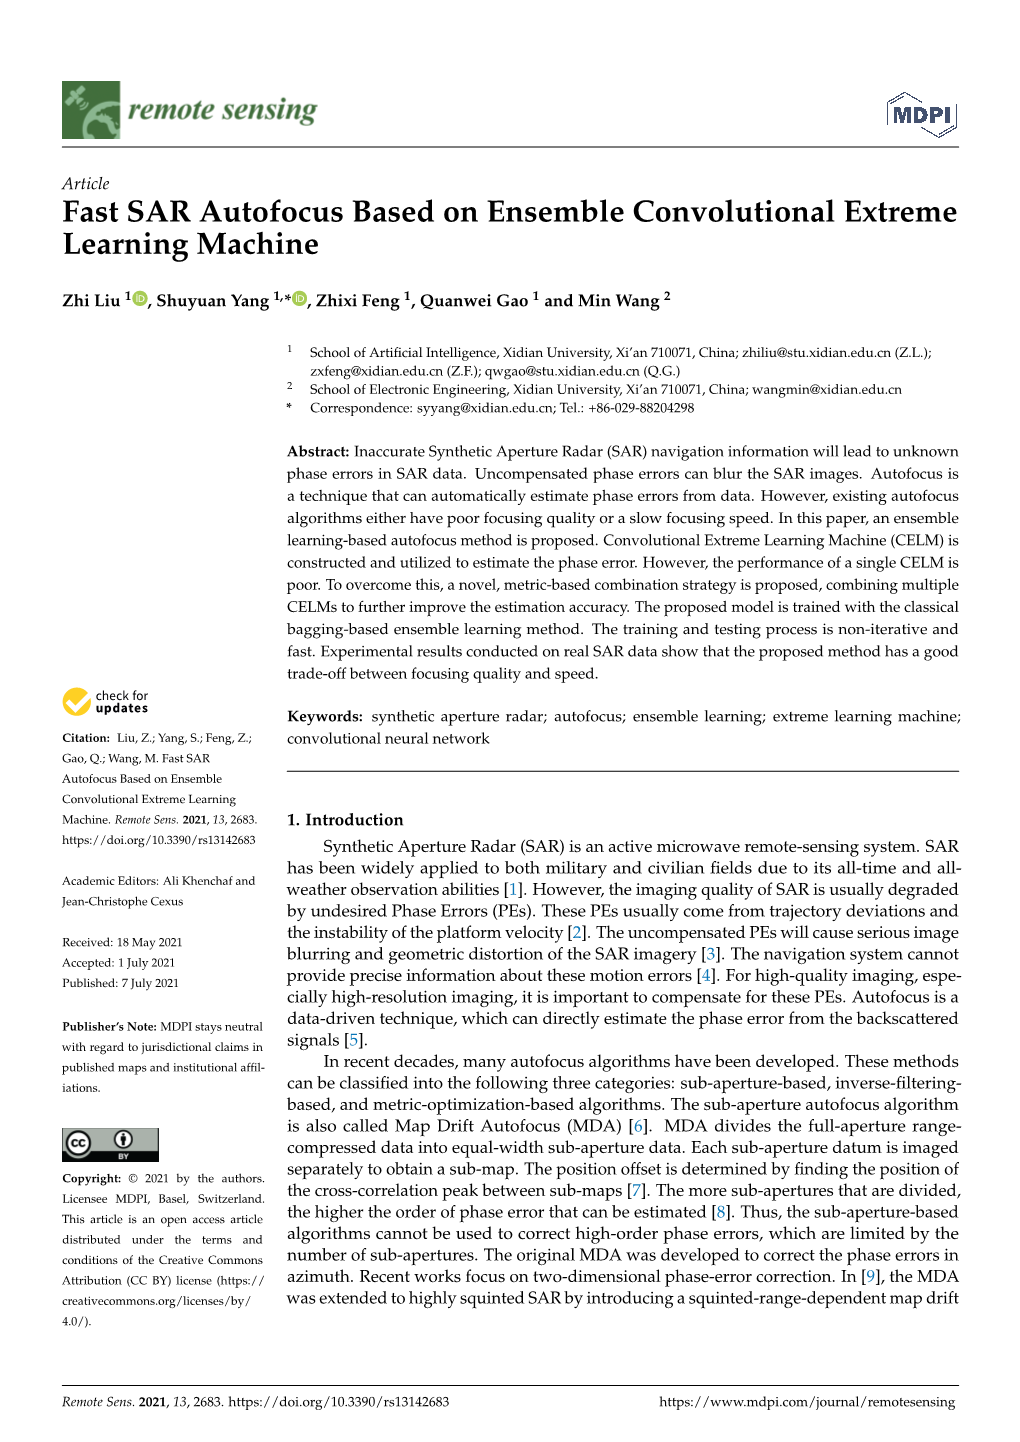 Fast SAR Autofocus Based on Ensemble Convolutional Extreme Learning Machine